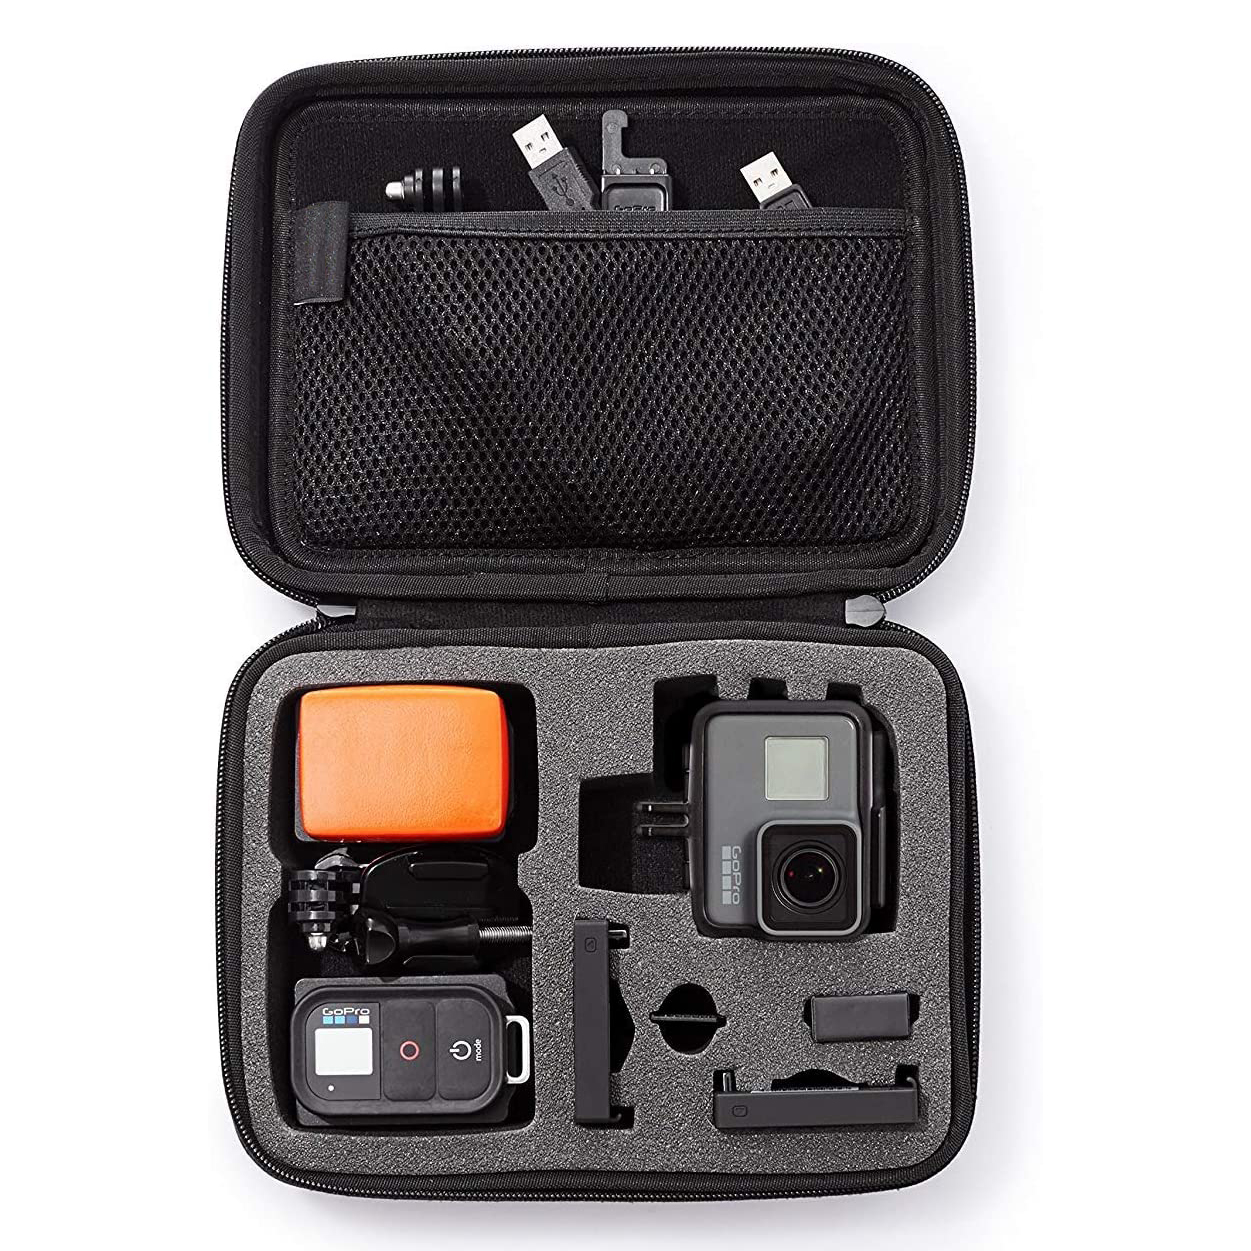 Waterproof Eva Hard Shell Travel Case Camera Gopro Carrying Case